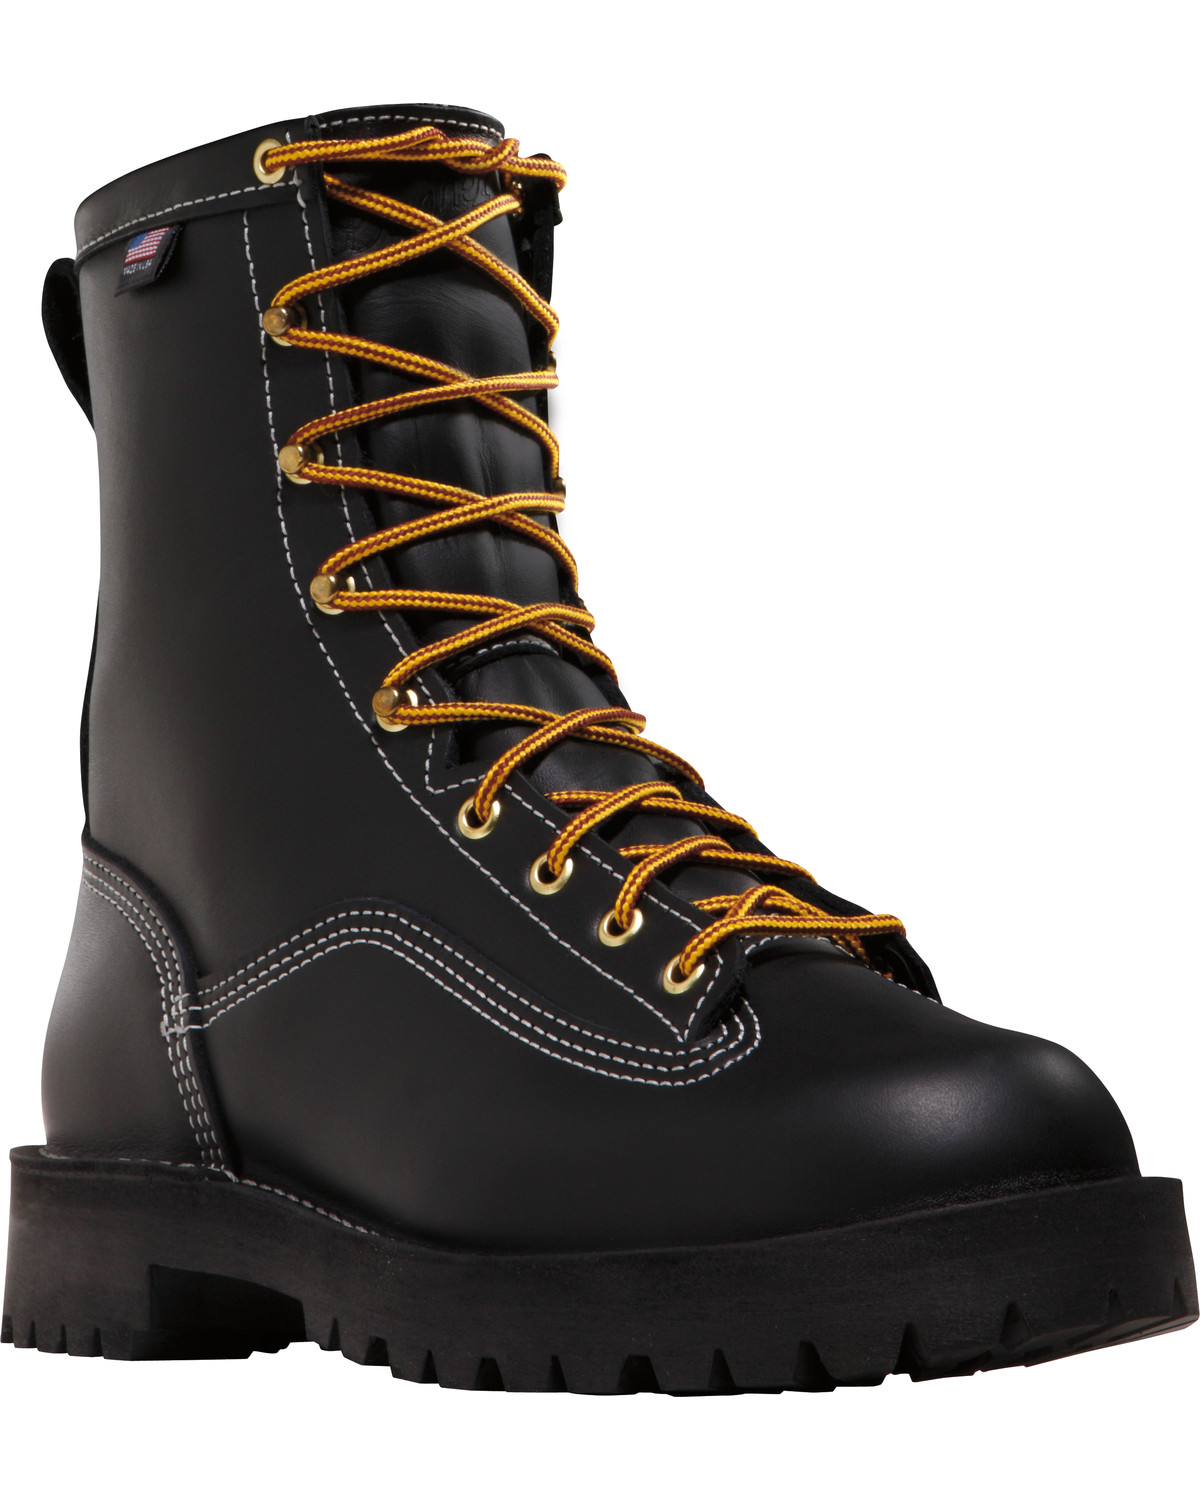 Danner Men's Super Rain Forest GTX® Work Boots